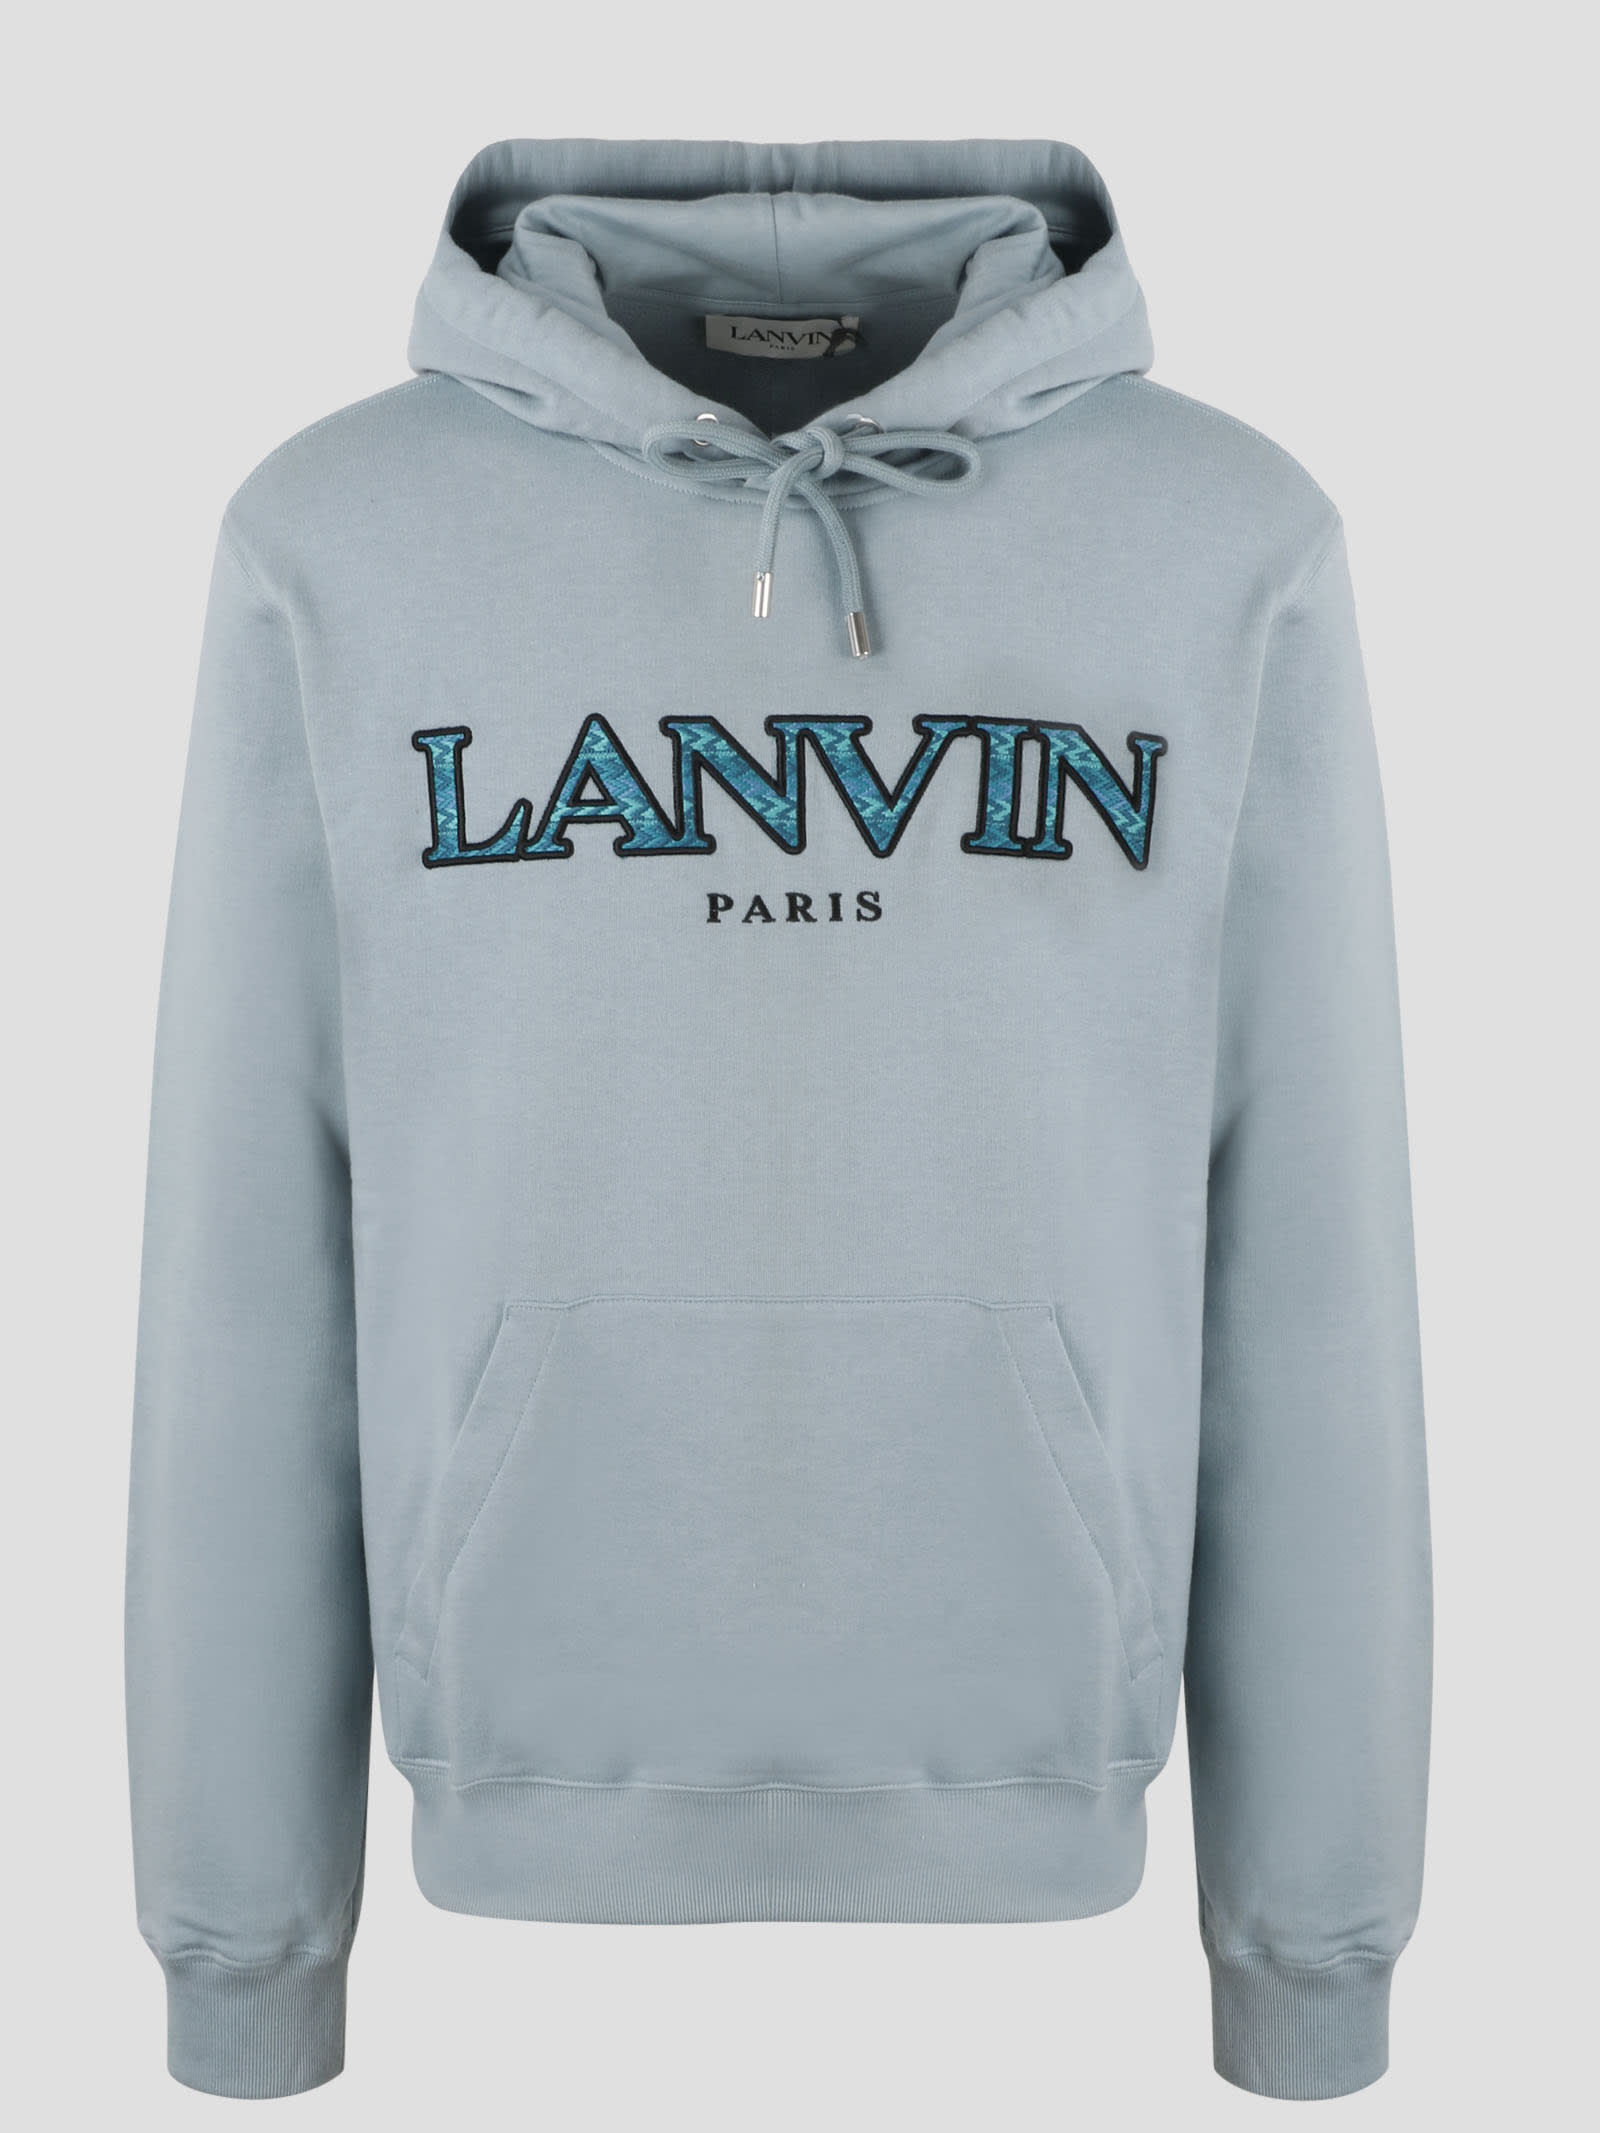 LANVIN Sweaters for Men | ModeSens